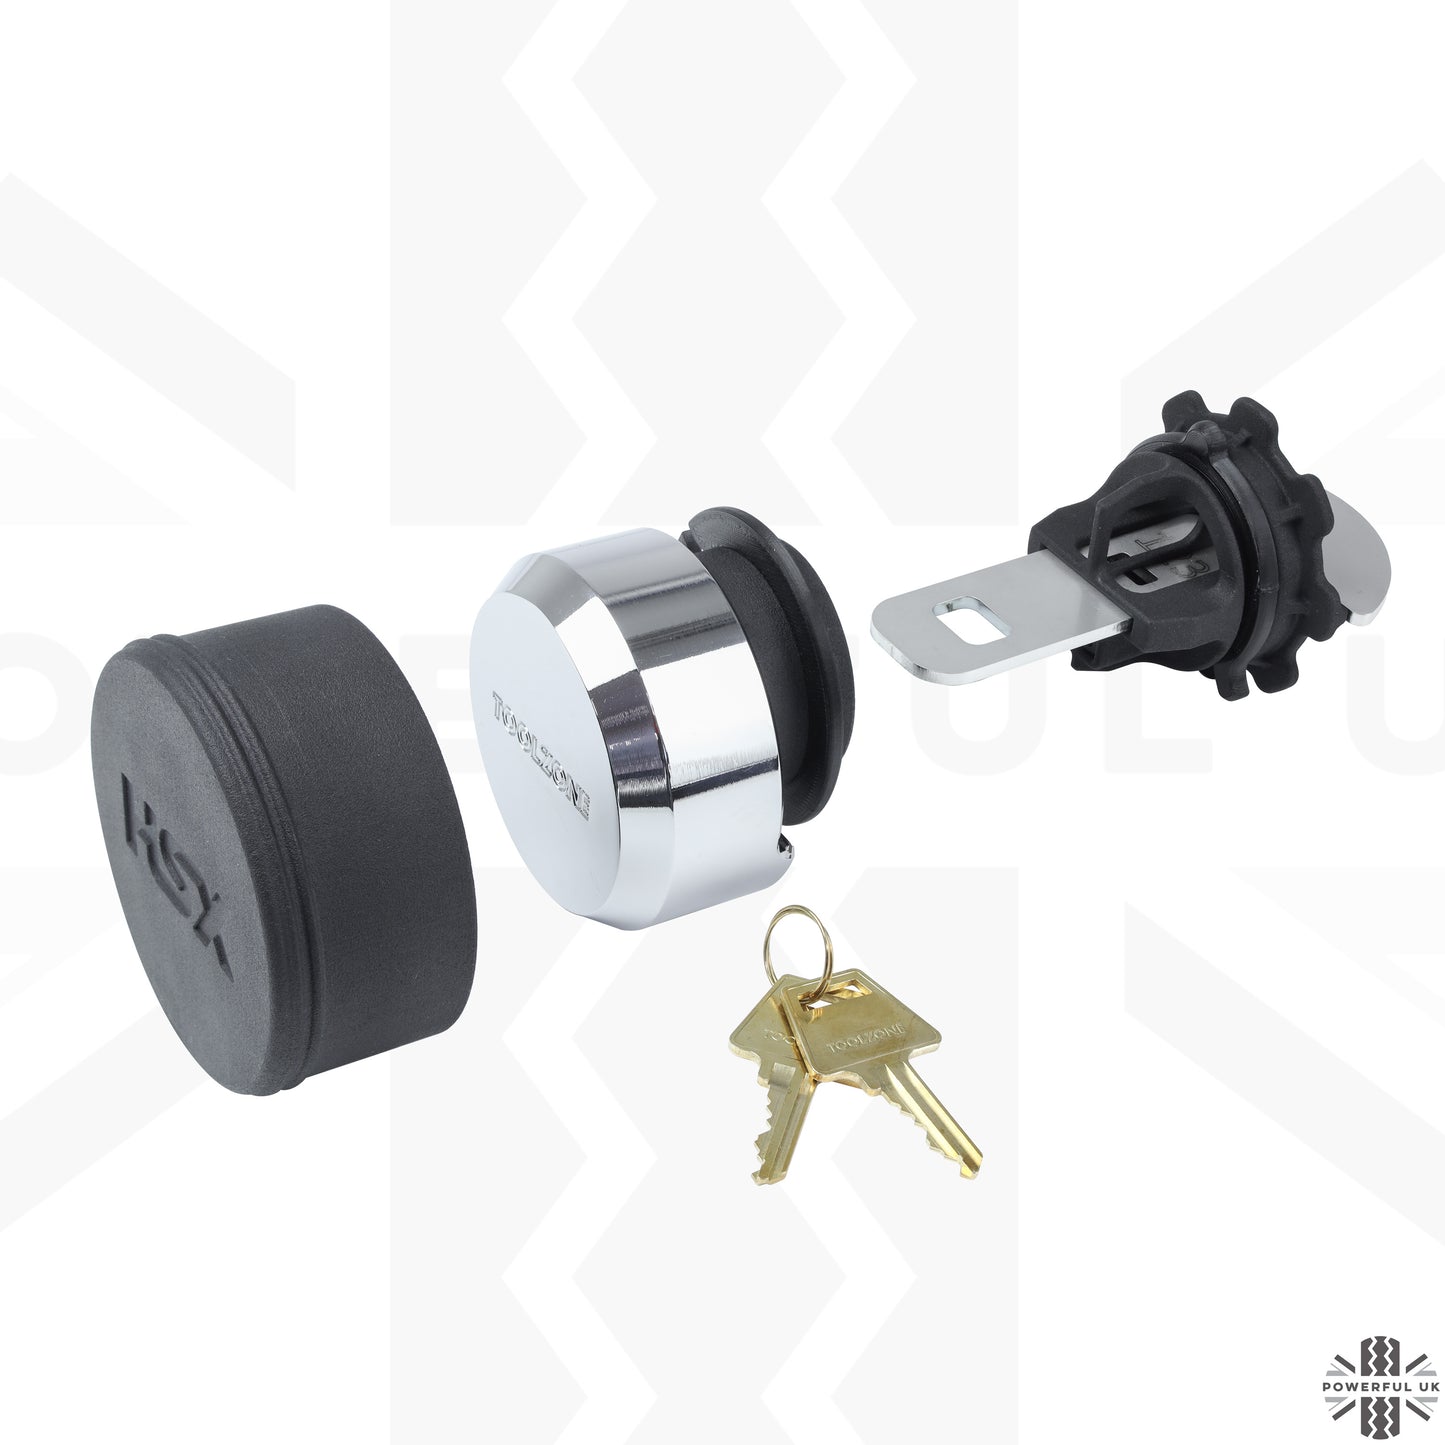 Lock Kit for 5095 Spare Wheel on Land Rover Defender L663